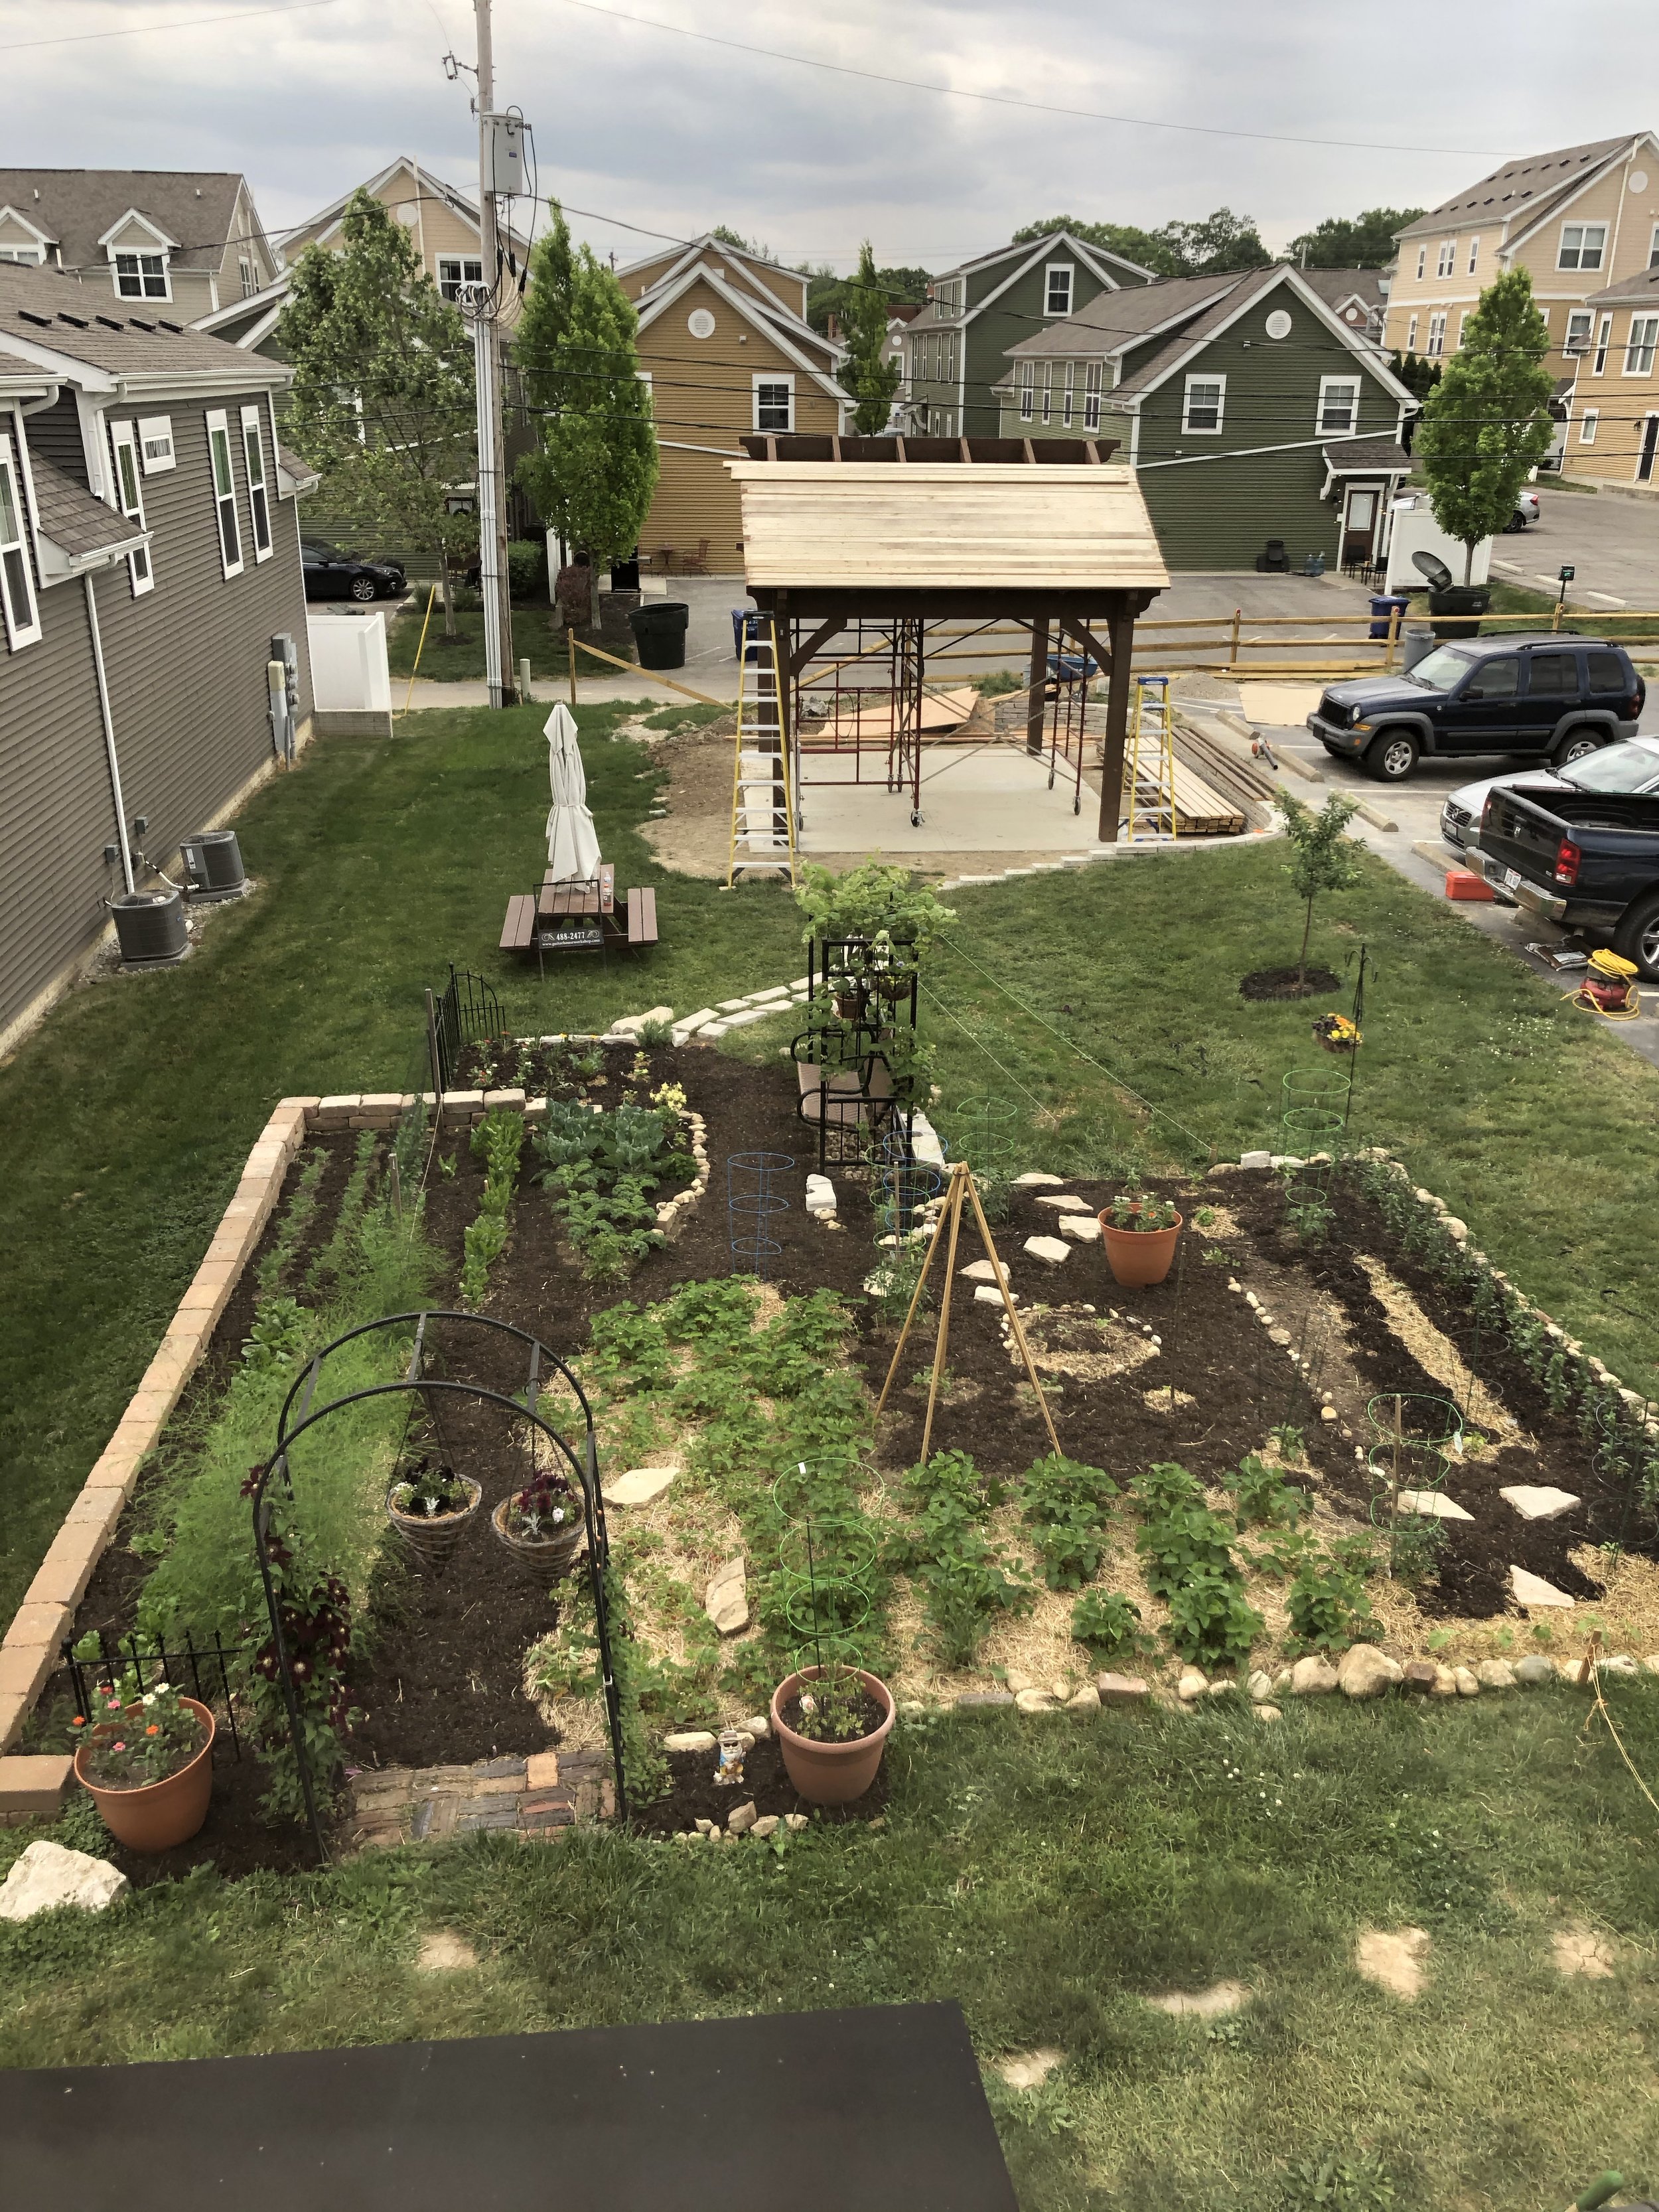 pavilion:garden in progress5.26.2021.jpg